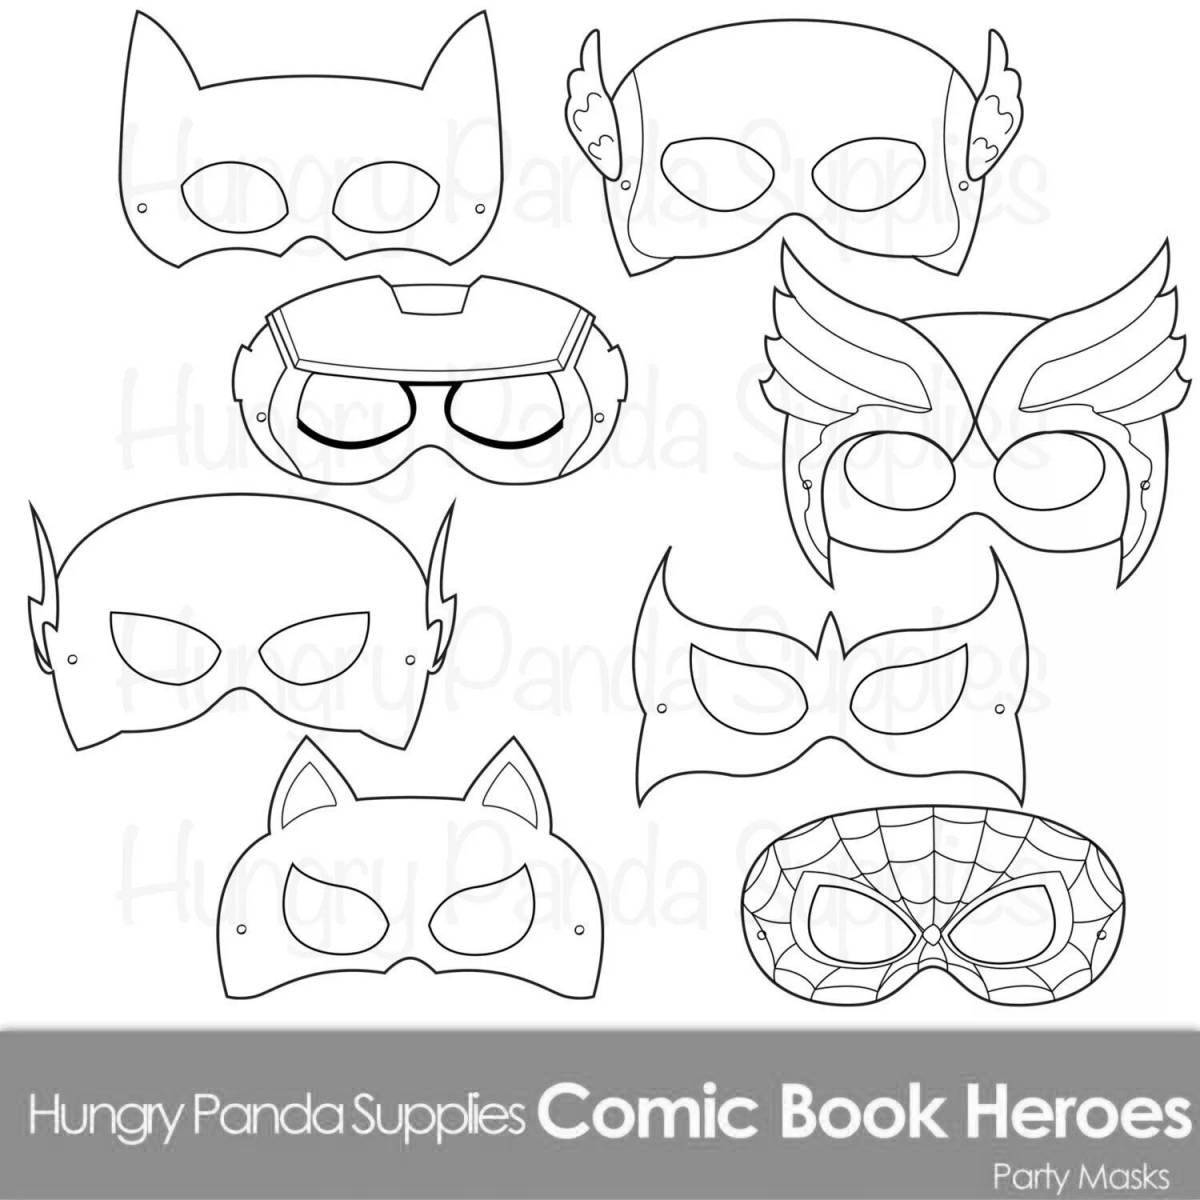 Coloring book colorful superhero mask